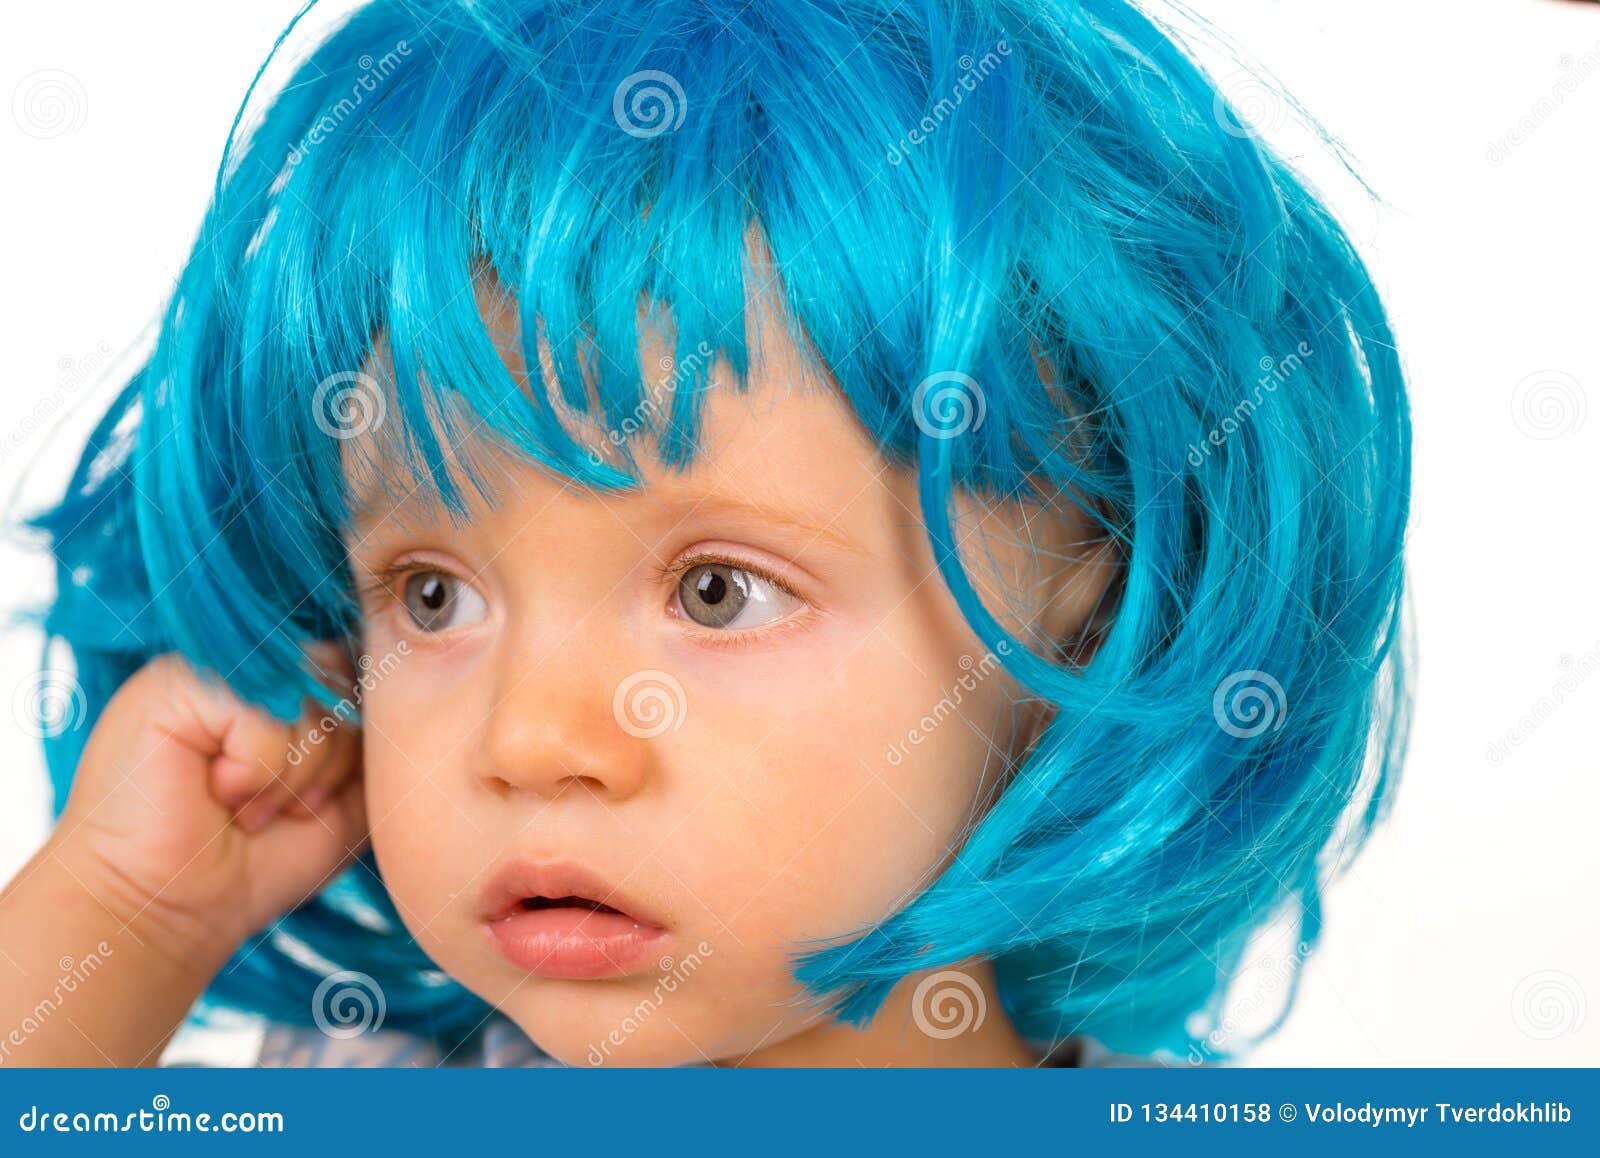 aesthetic baby blue hair